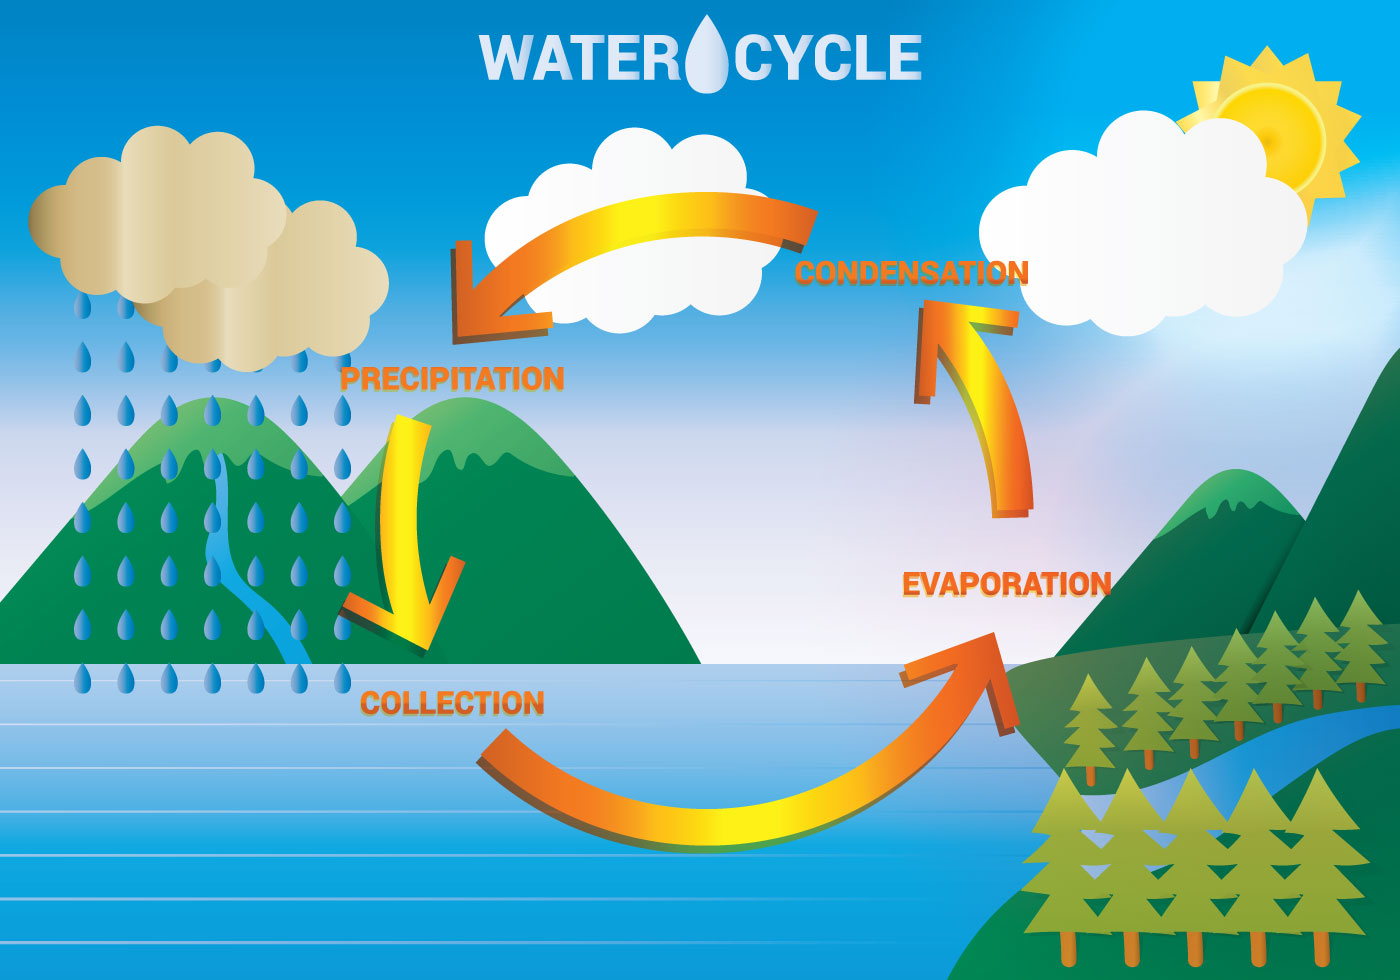 Water cycle_poster | Water cycle, Water cycle poster, Cycle drawing-saigonsouth.com.vn